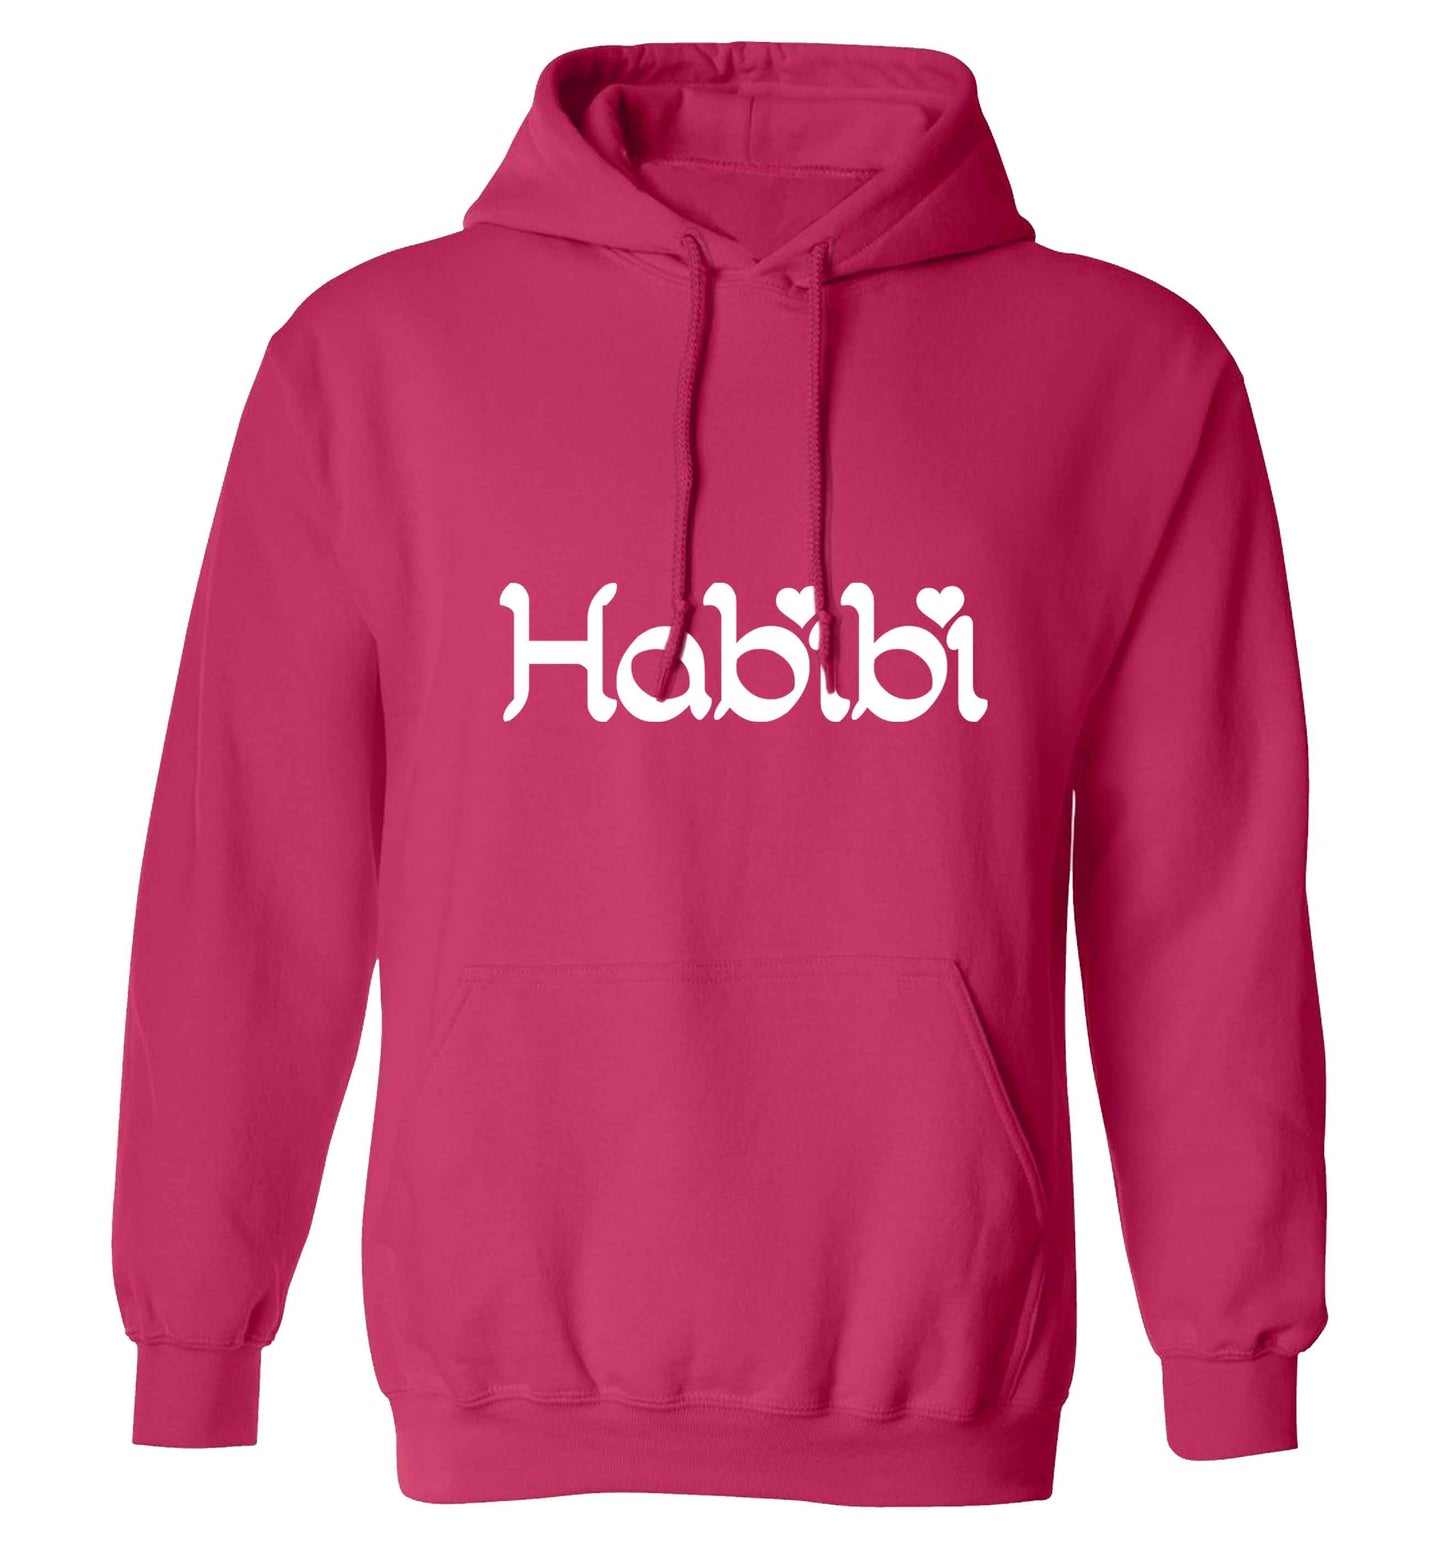 Habibi adults unisex pink hoodie 2XL